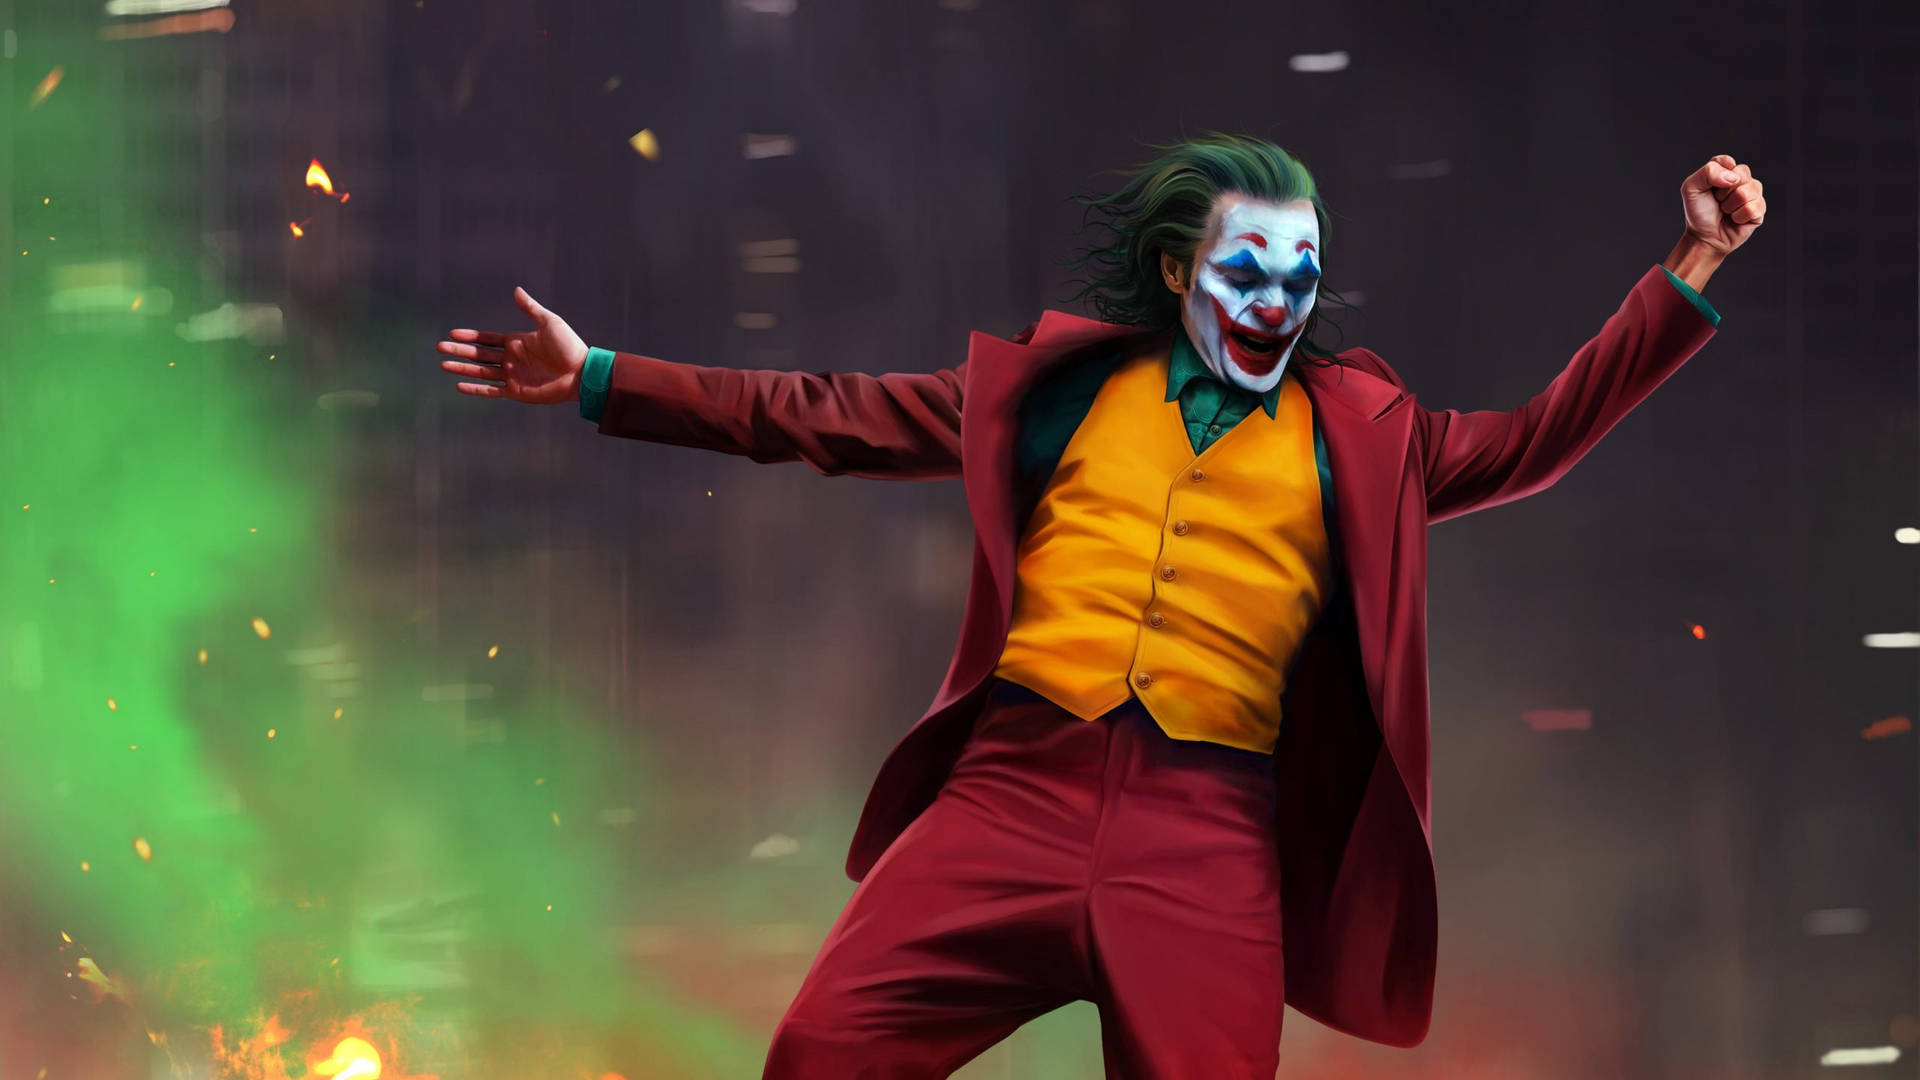 2560 X 1440 Movie With Joker Wallpaper